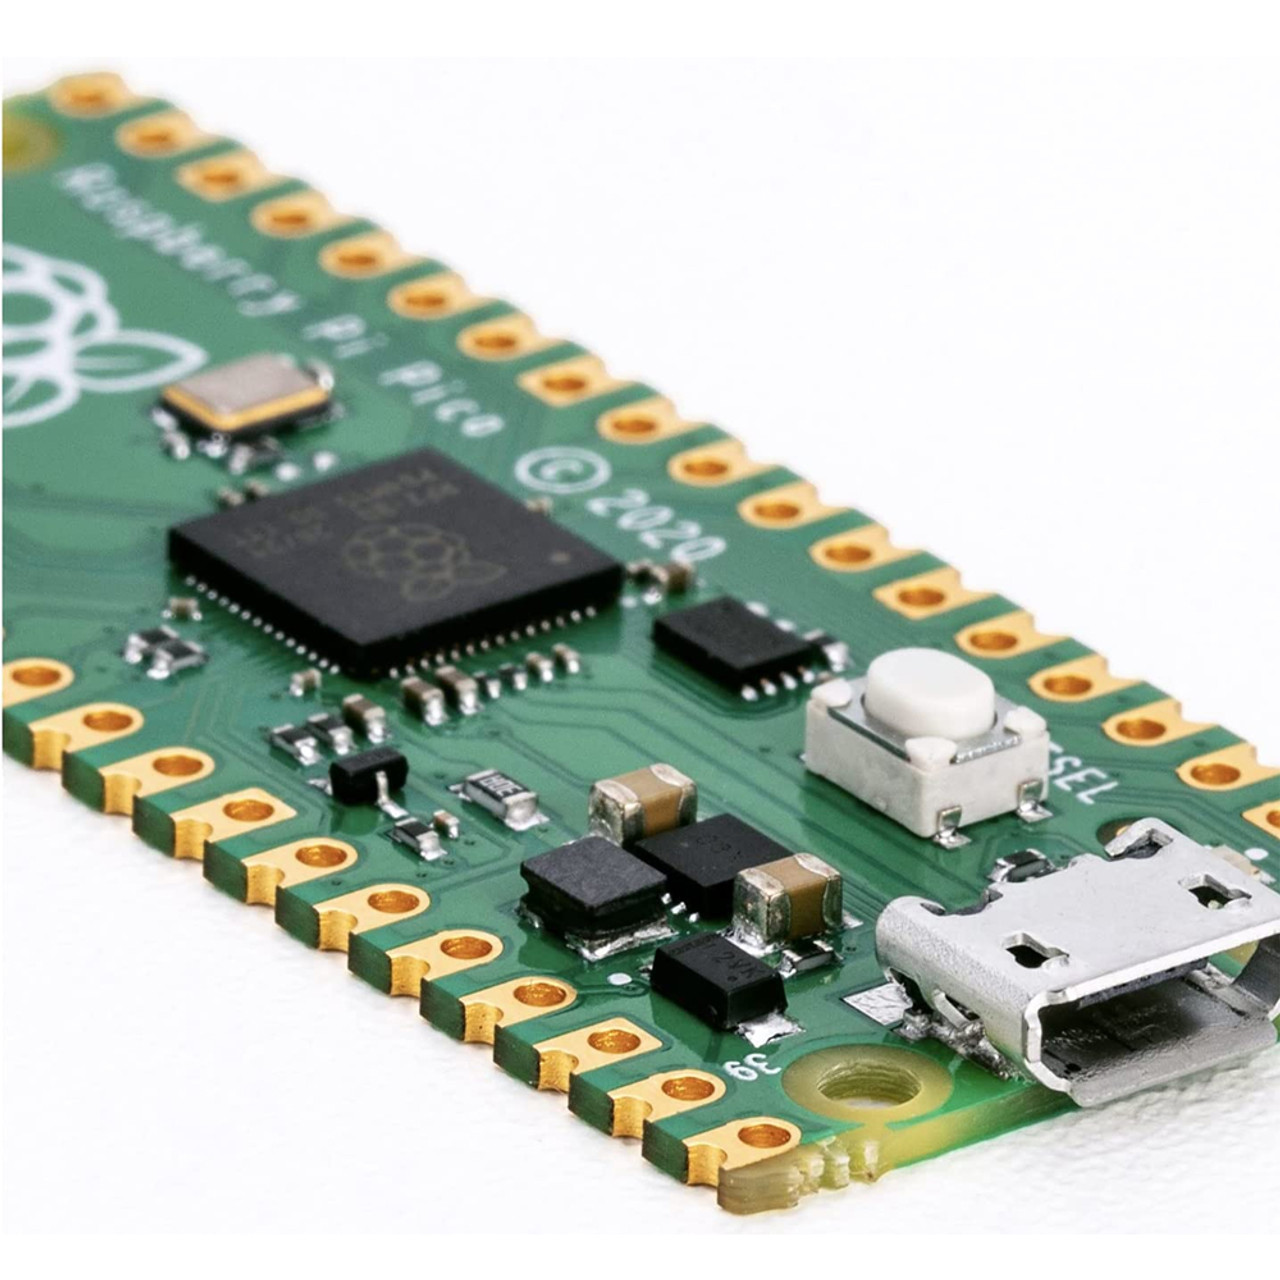 AAAwave Raspberry Pi Pico RP2040 Microcontroller Board 22AJ1097, 32 bit, 2MB Flash